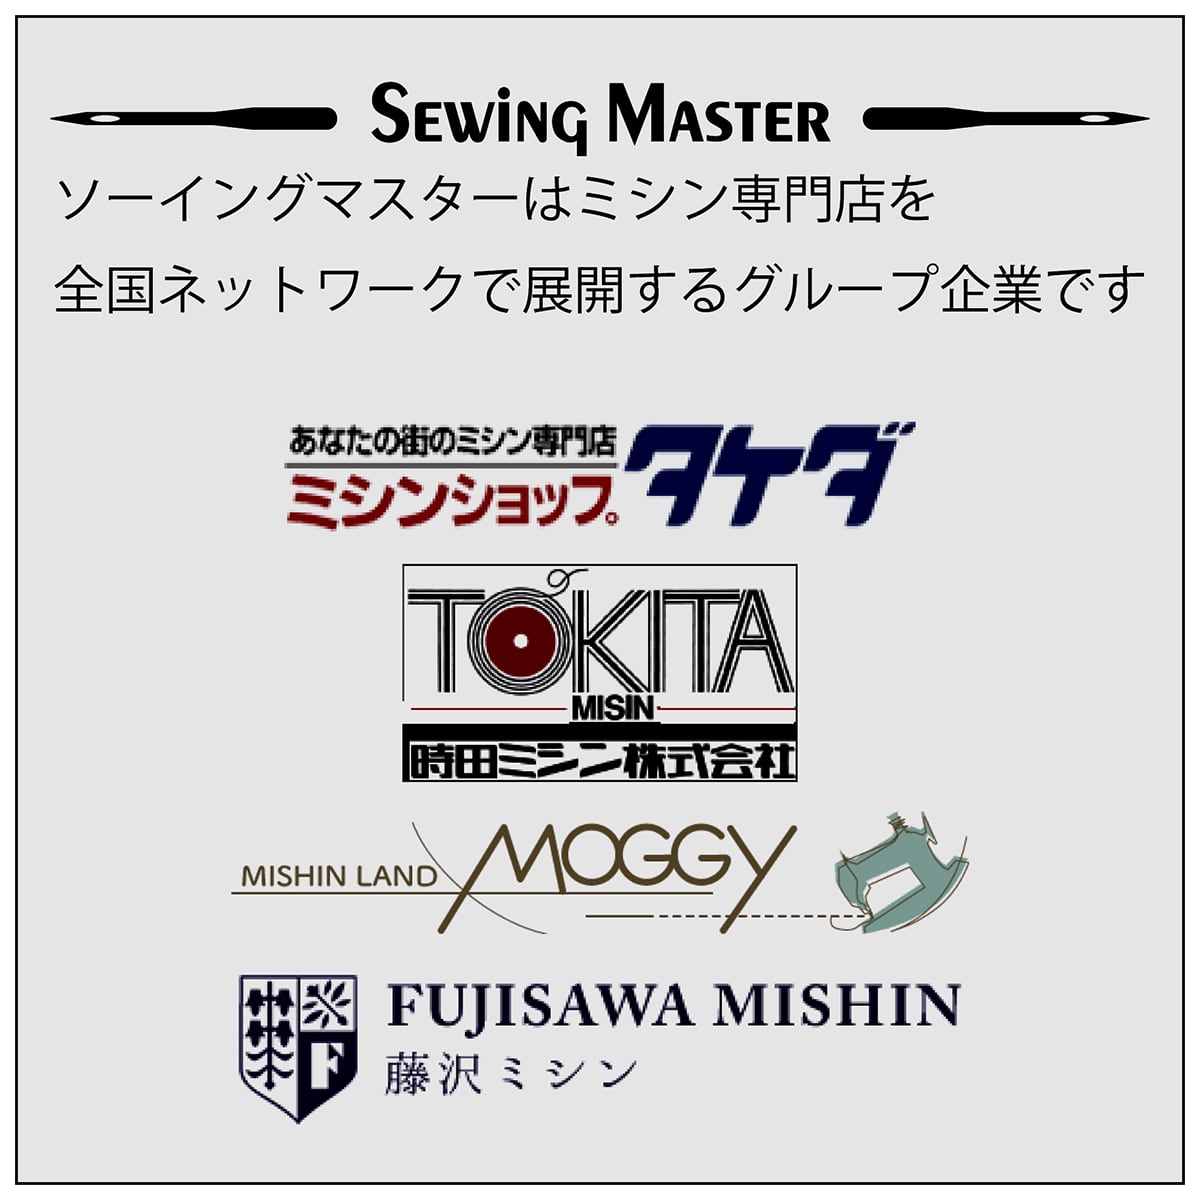 Sewing Masterの画像